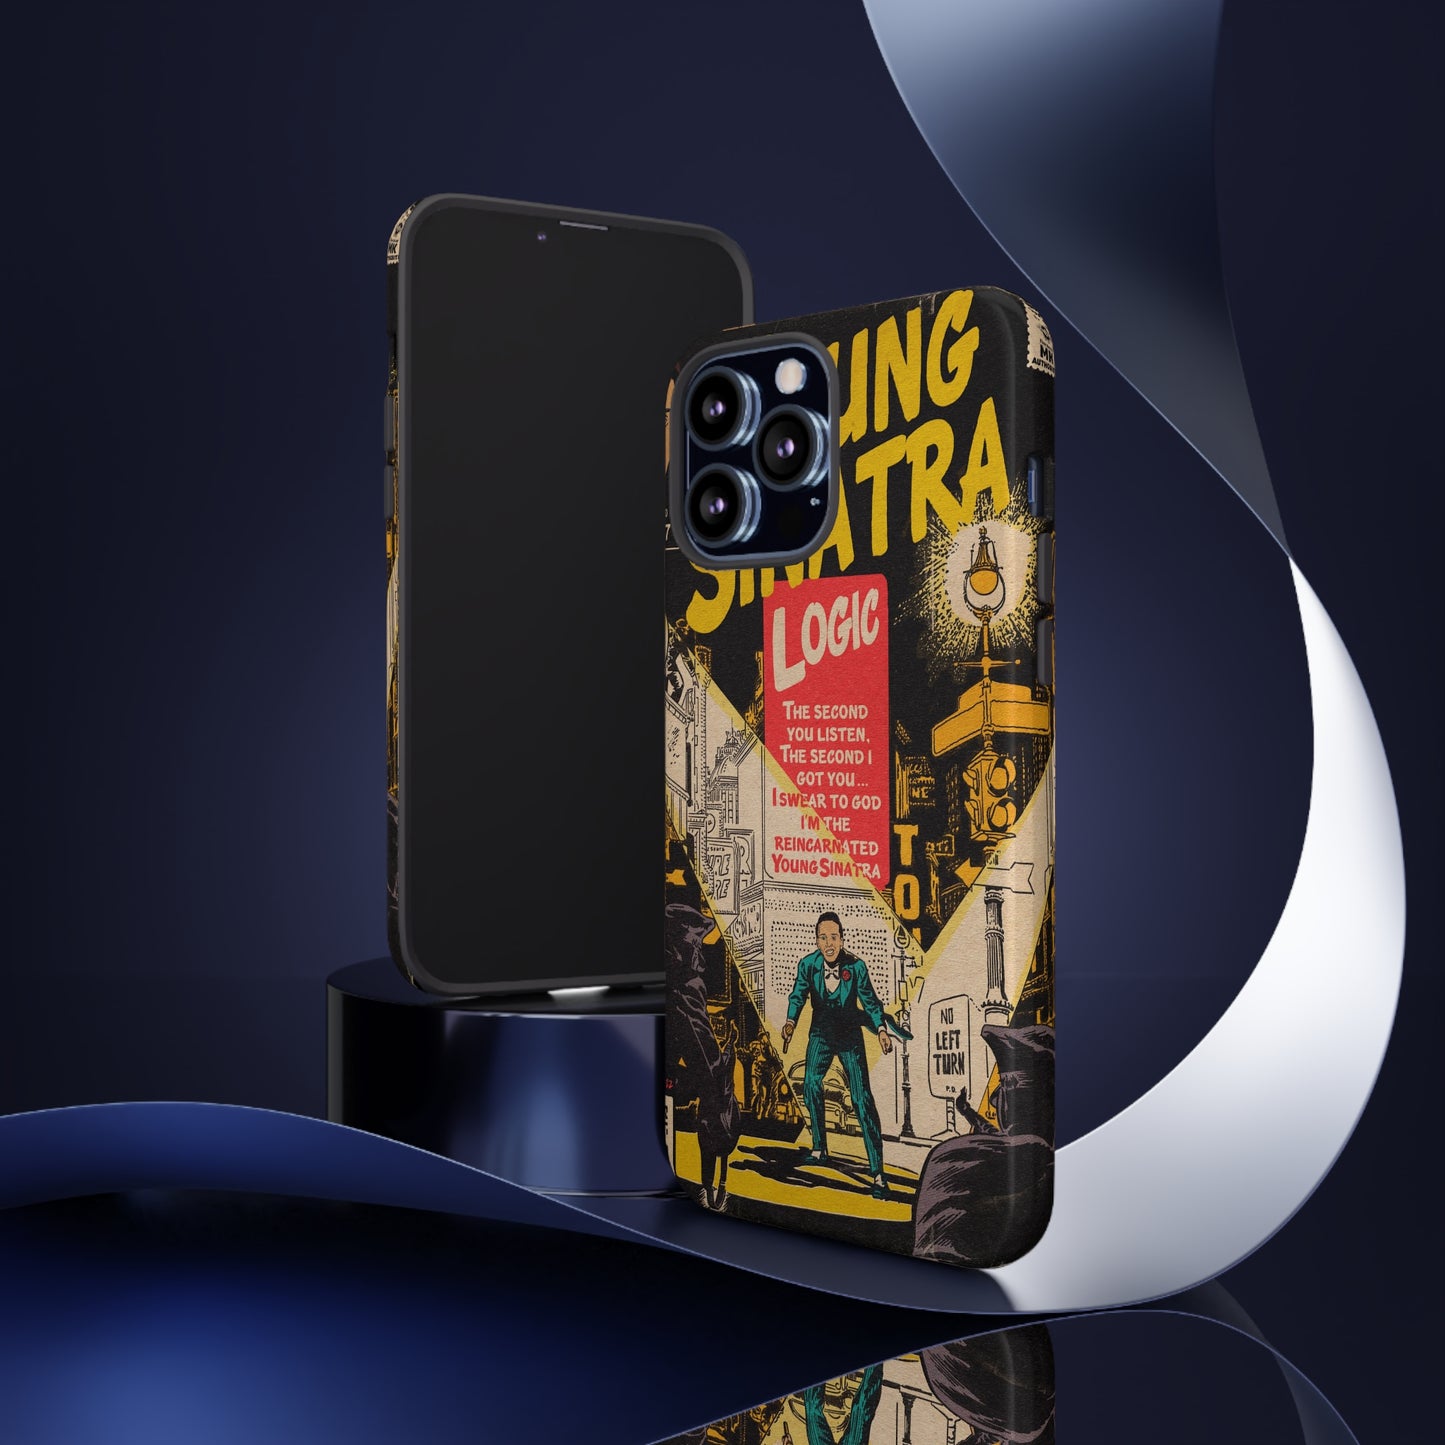 Logic - Young Sinatra - Tough Phone Cases